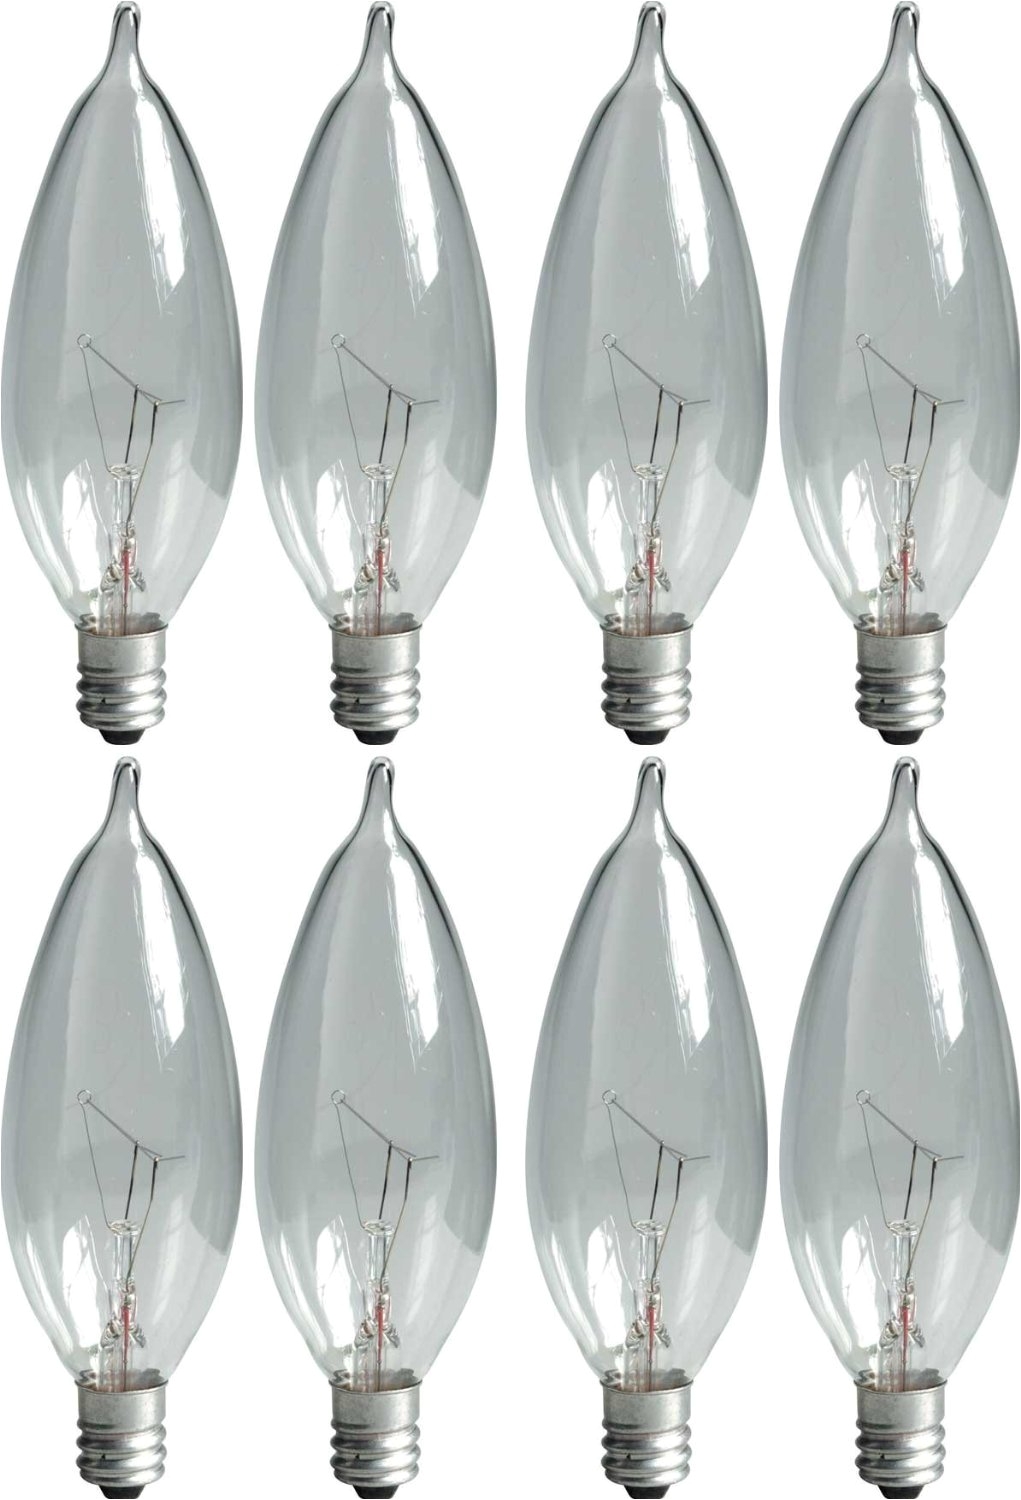 ge lighting crystal clear 66104 25 watt 220 lumen bent tip light bulb with candelabra base 8 pack incandescent bulbs amazon com